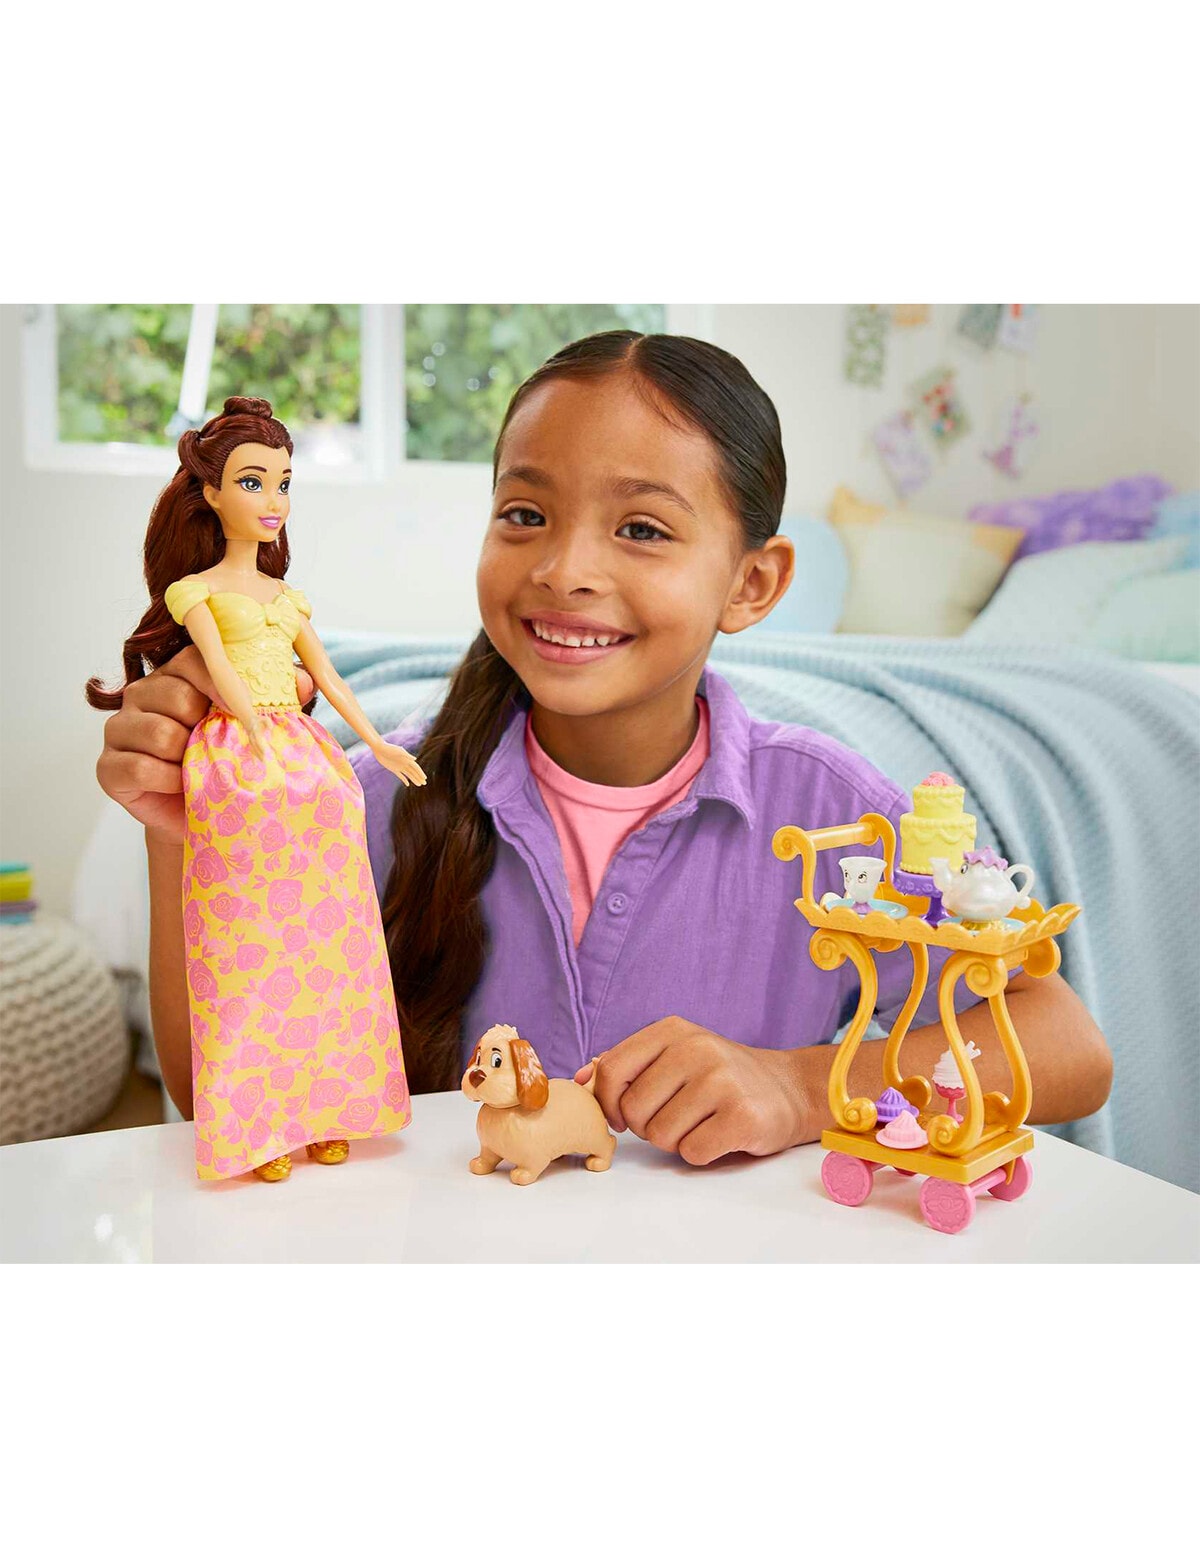 Best Buy: Disney Princess Belle's Royal Kitchen E8936